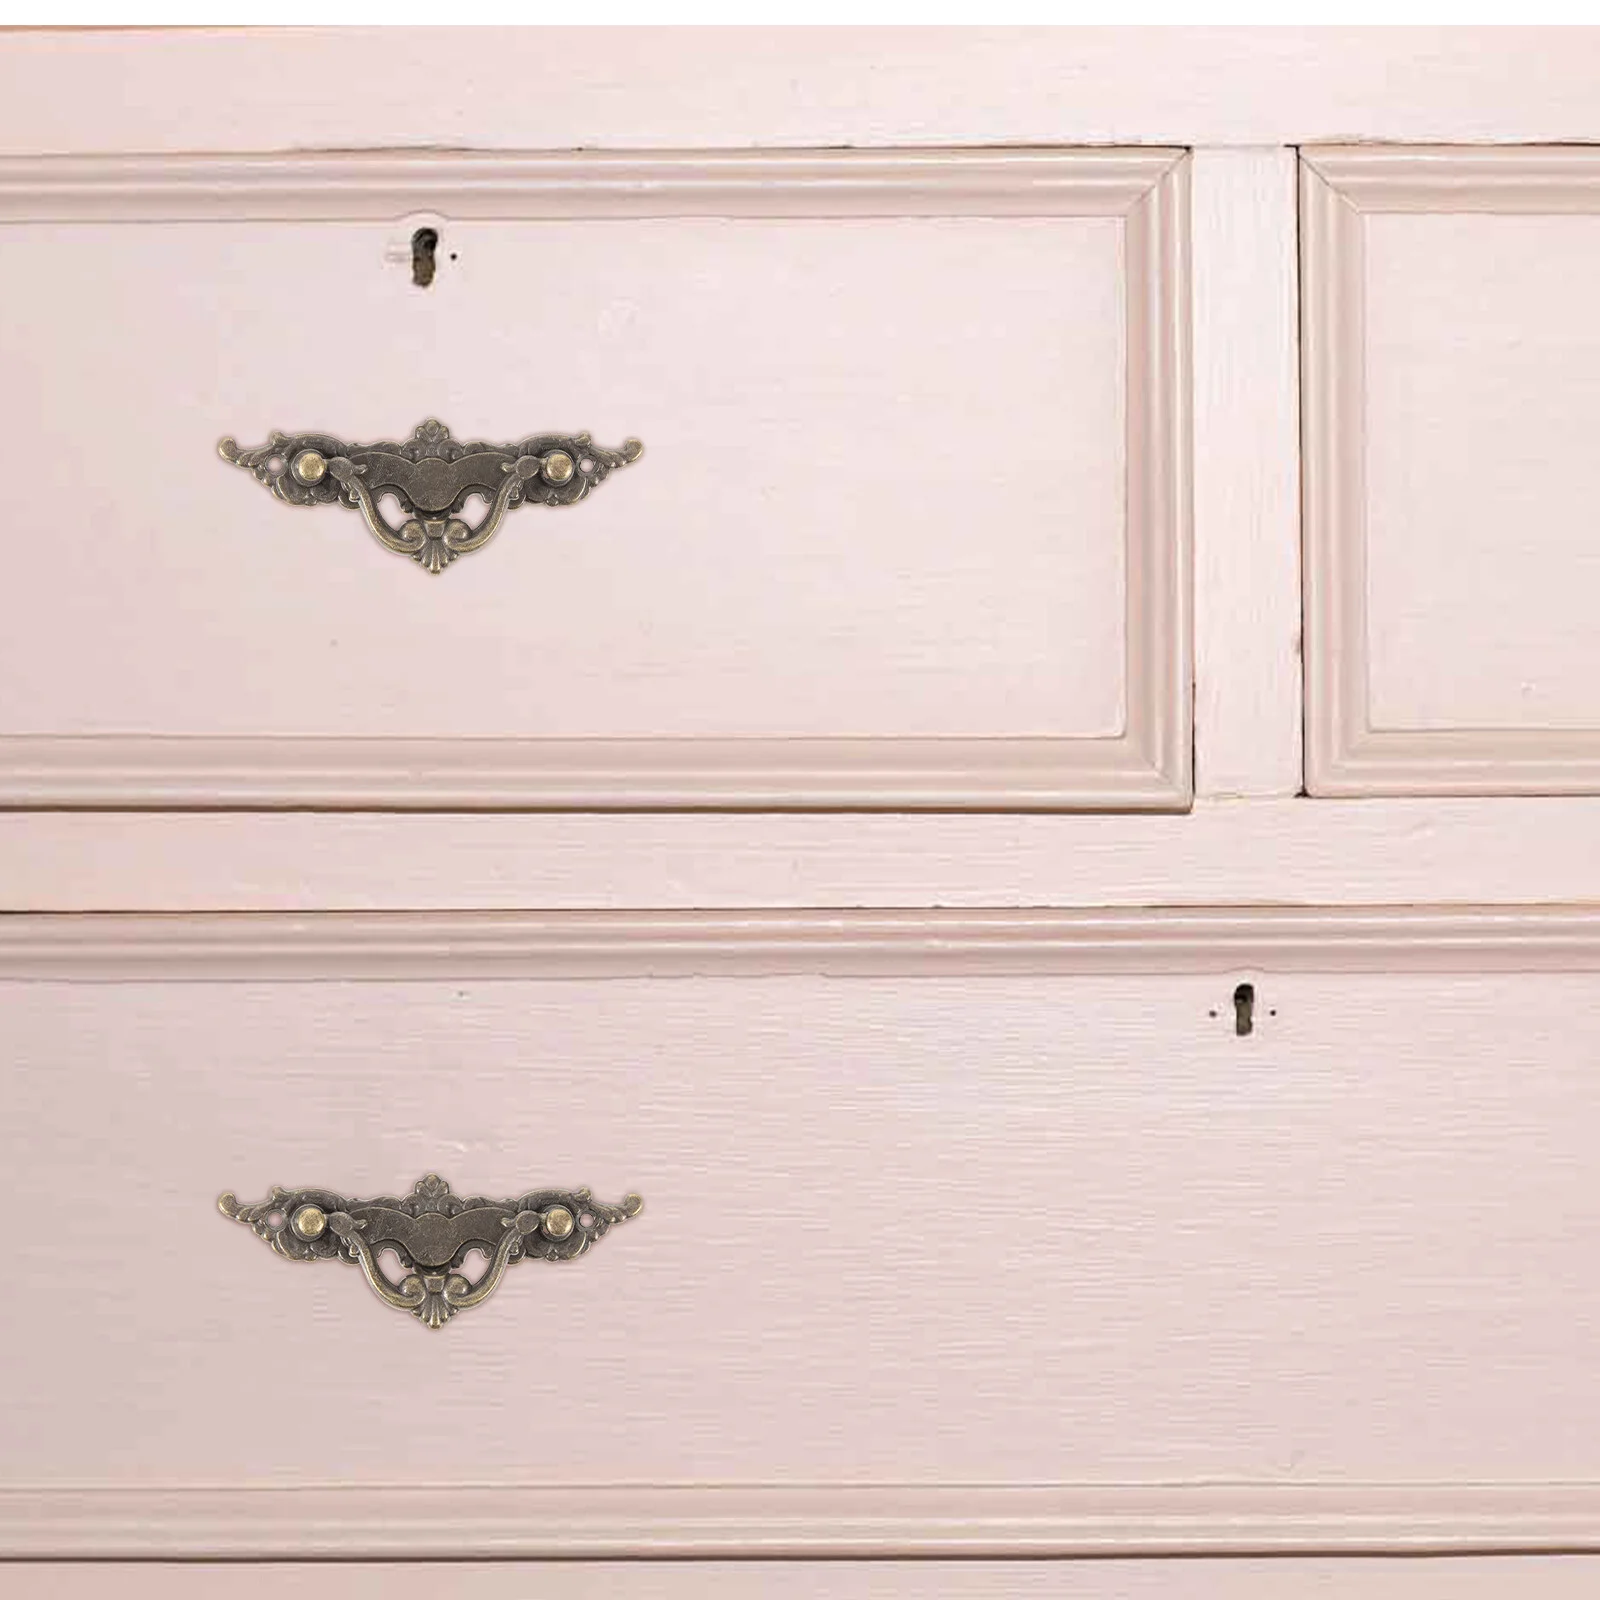 

2 Pcs Door Handle Dresser Pulls Vintage Knobs Drawer Vintage Cabinet Pulls Zinc Alloy Decorative Kitchen